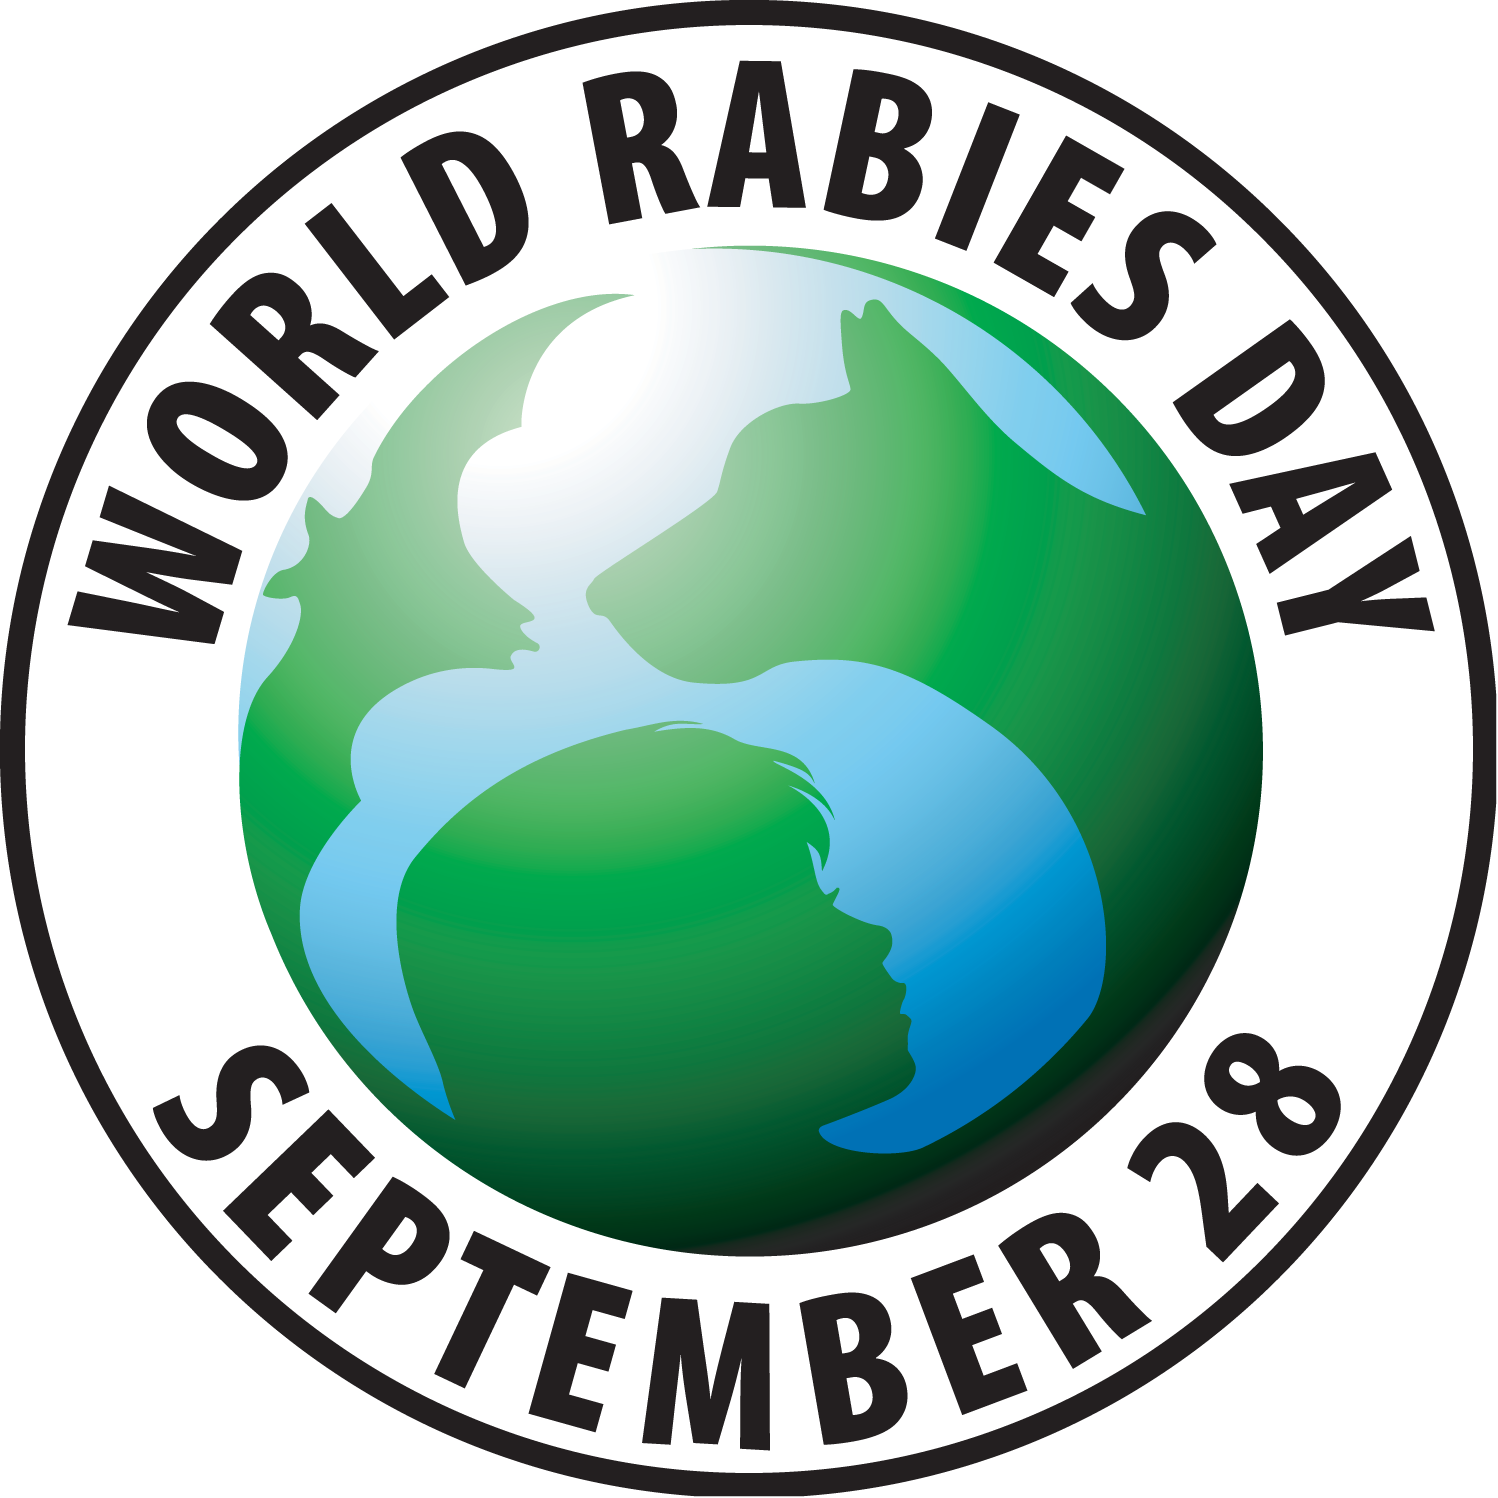 Standard Logos - World Rabies Day 2016 Theme (1498x1498)